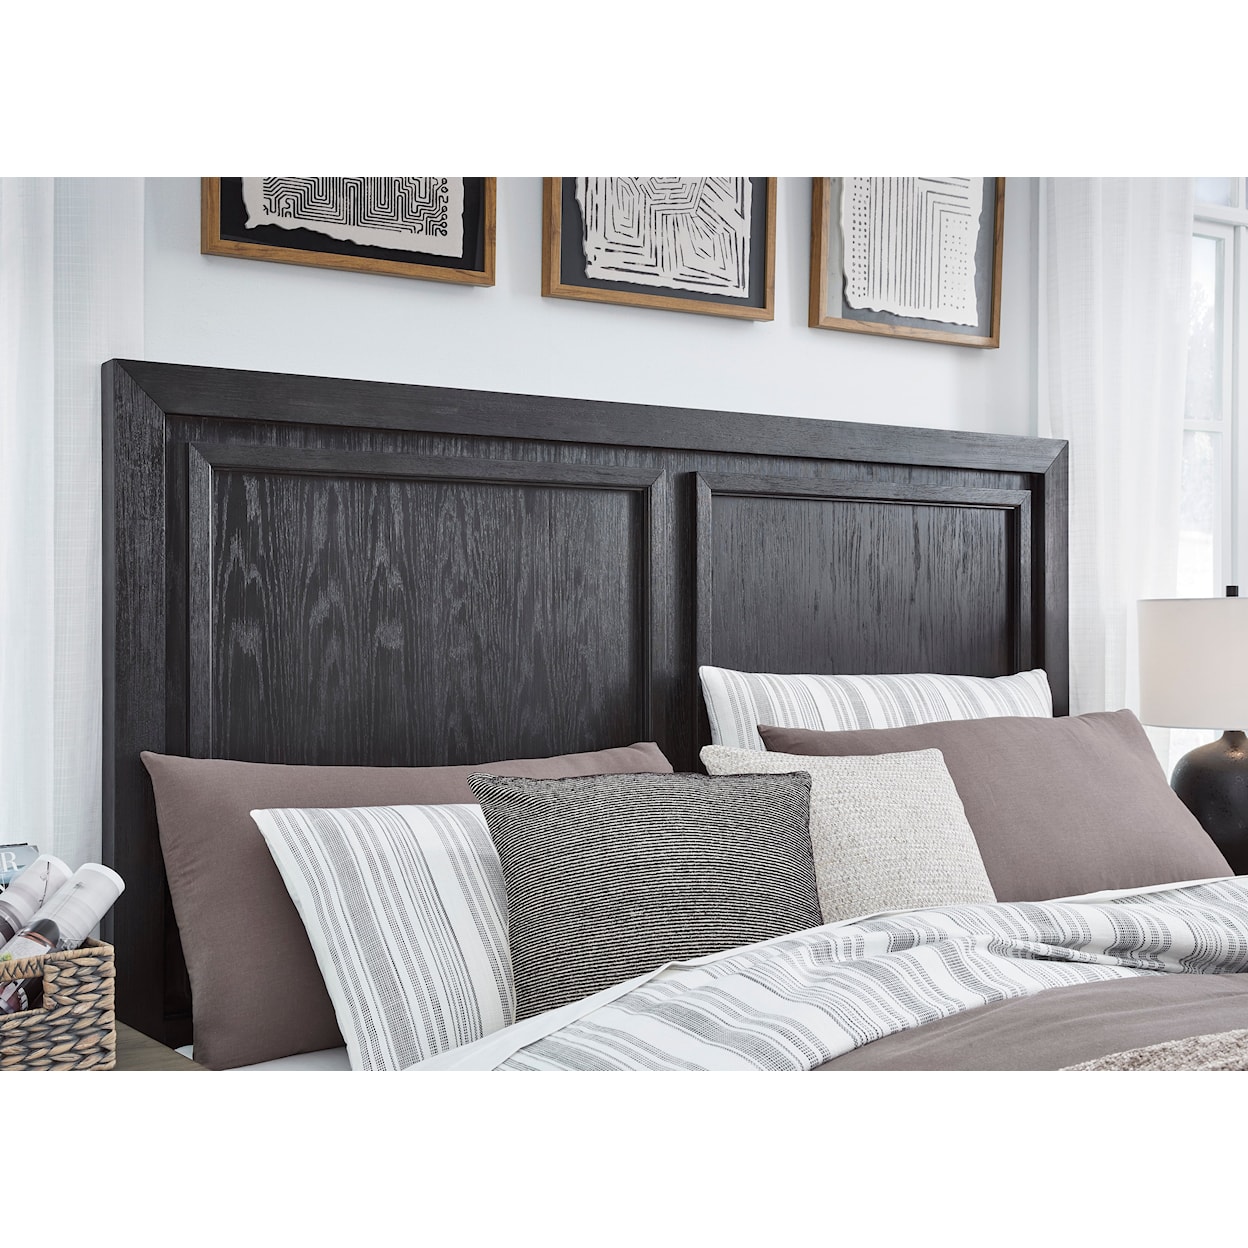 Ashley Furniture Signature Design Foyland King Panel Storage Bed